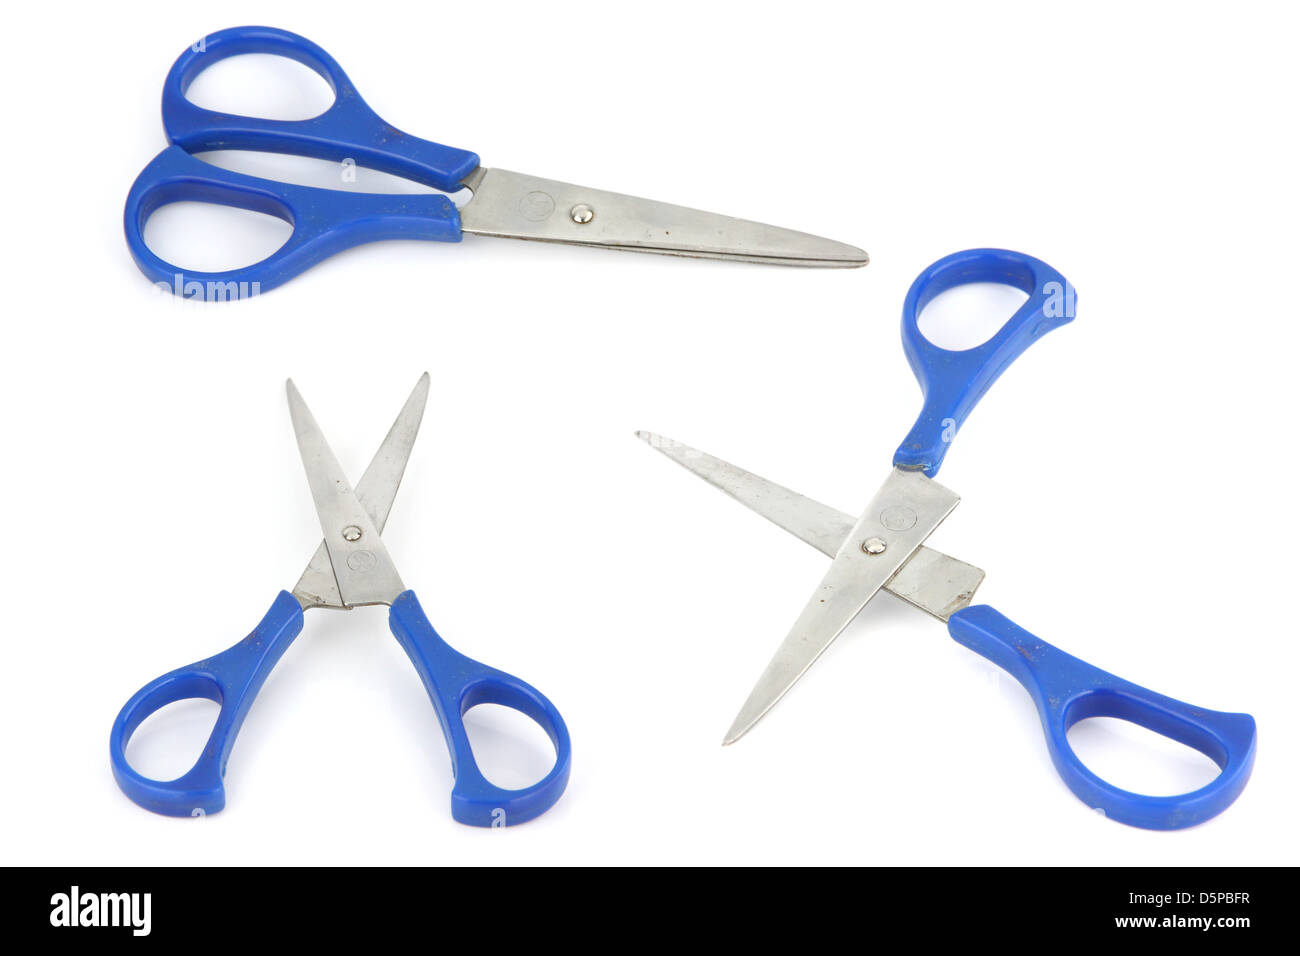 The blue scissors three action. Stock Photo